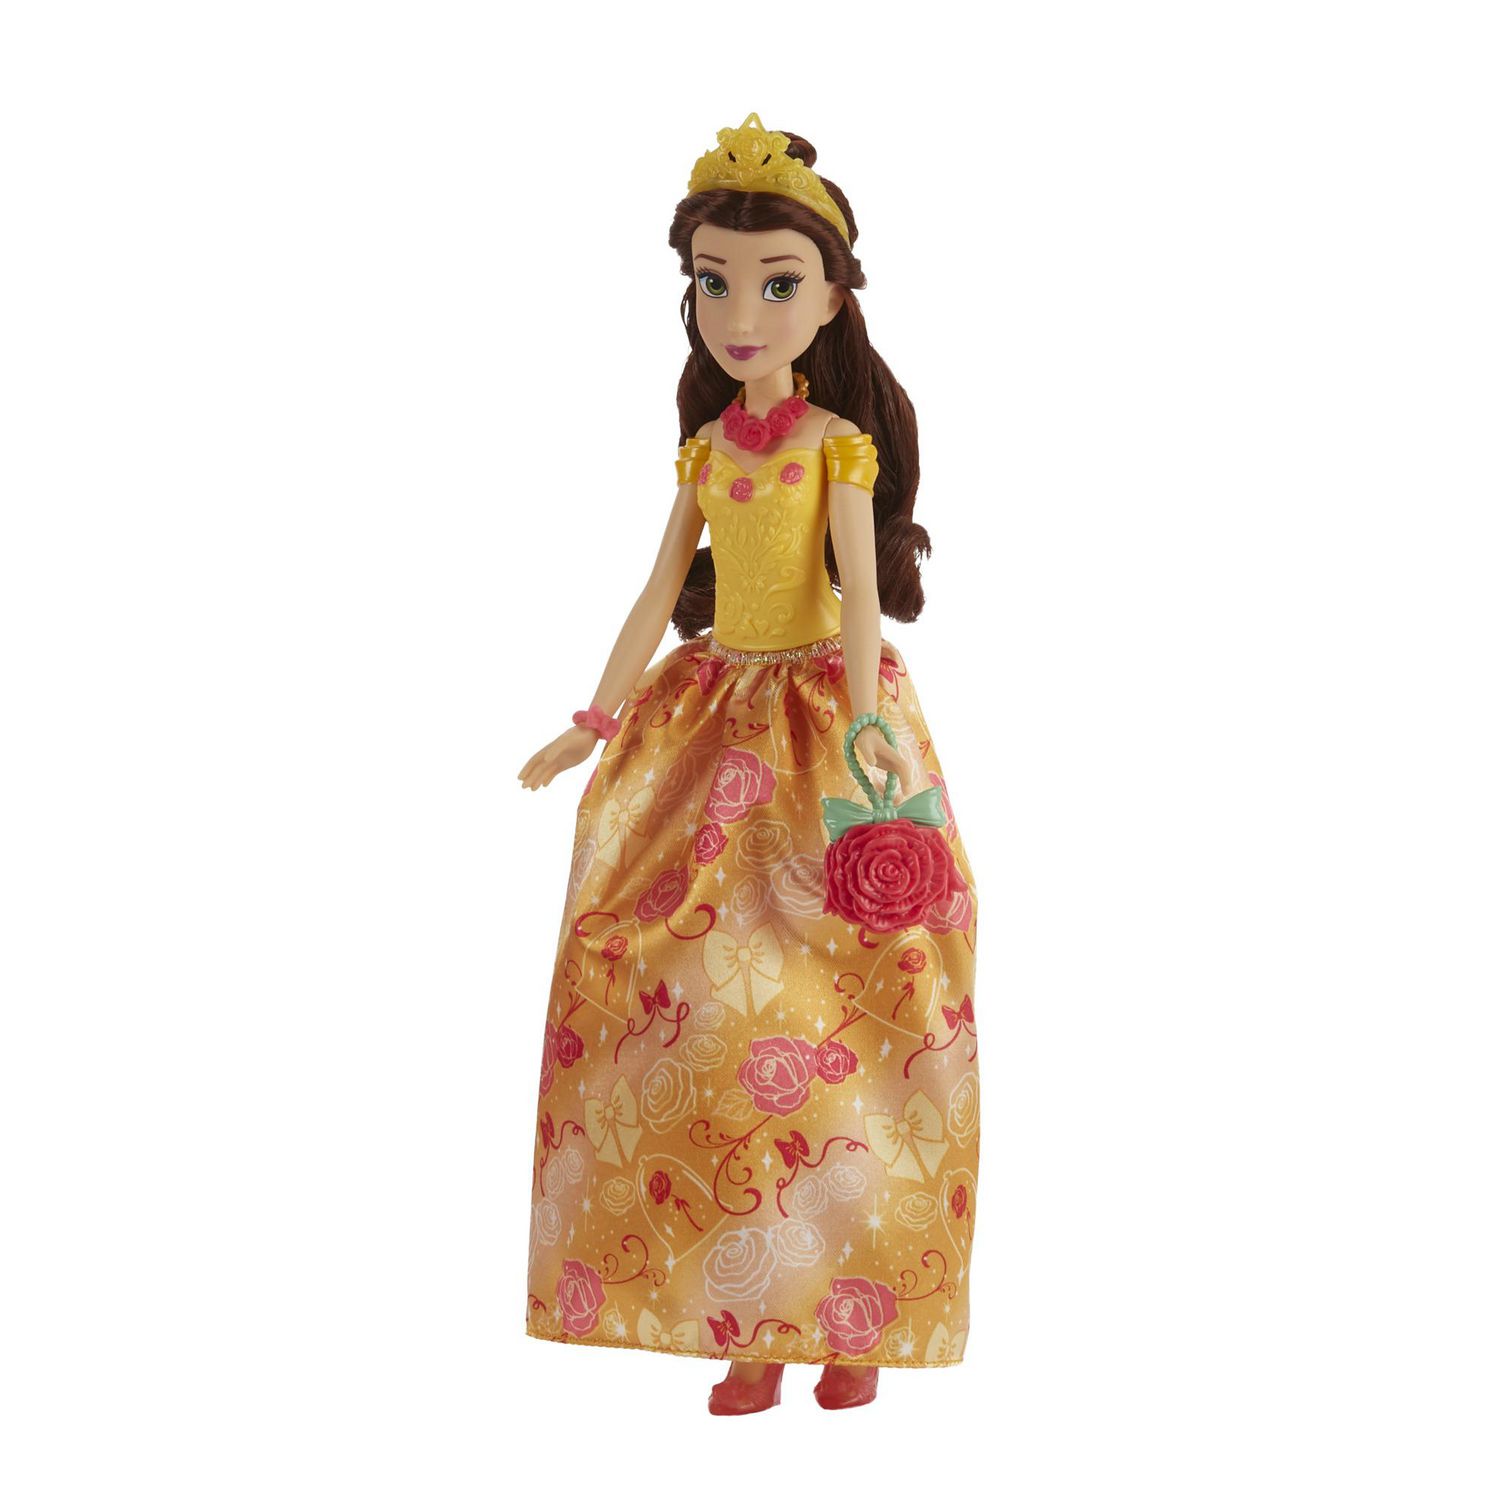 Review: Disney Princess Fashion Dolls - The Clearance Bin